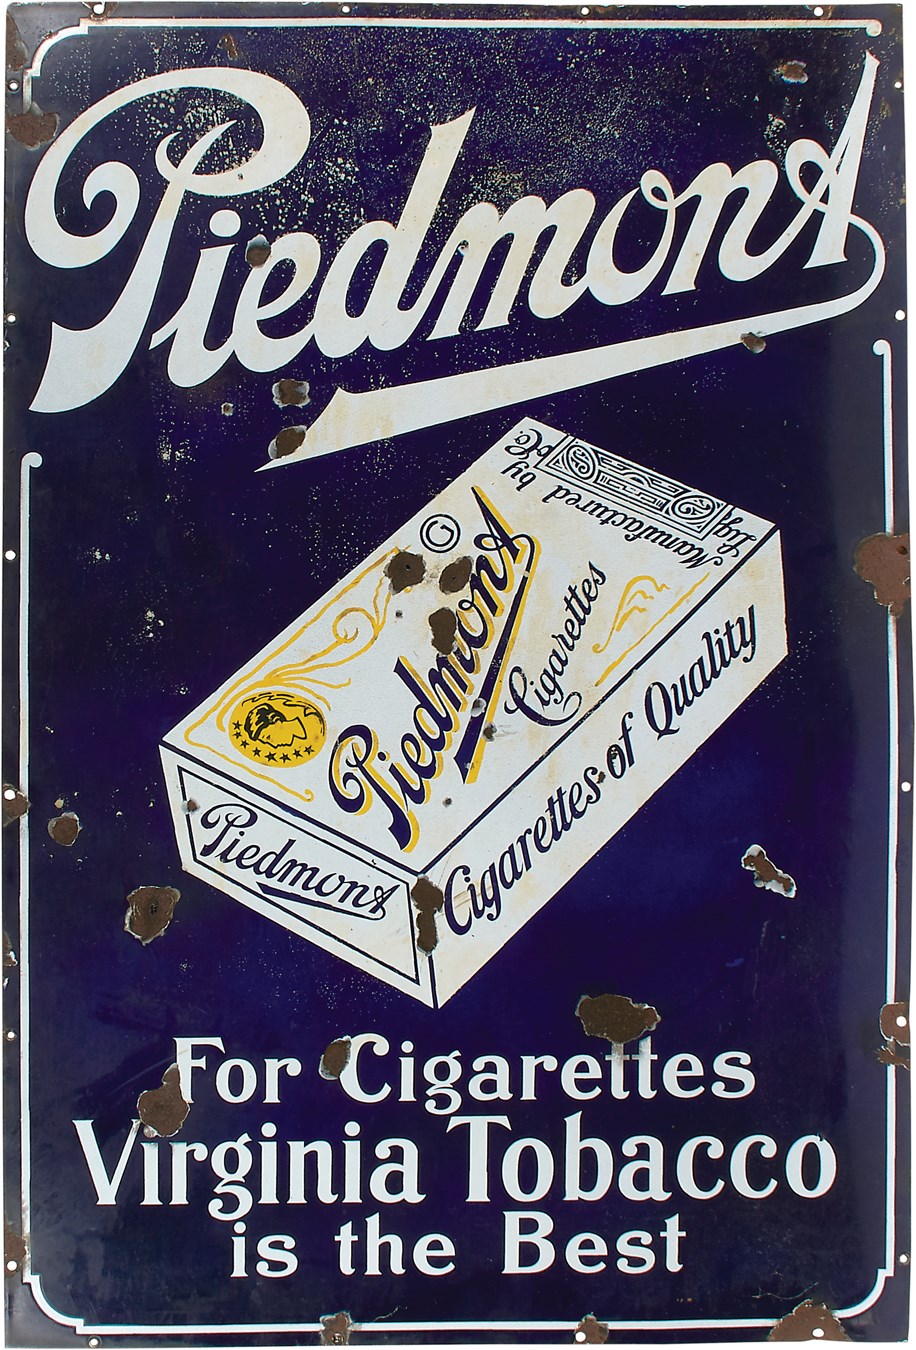 Baseball Memorabilia - Large Piedmont Cigarettes Porcelain Advertising Sign